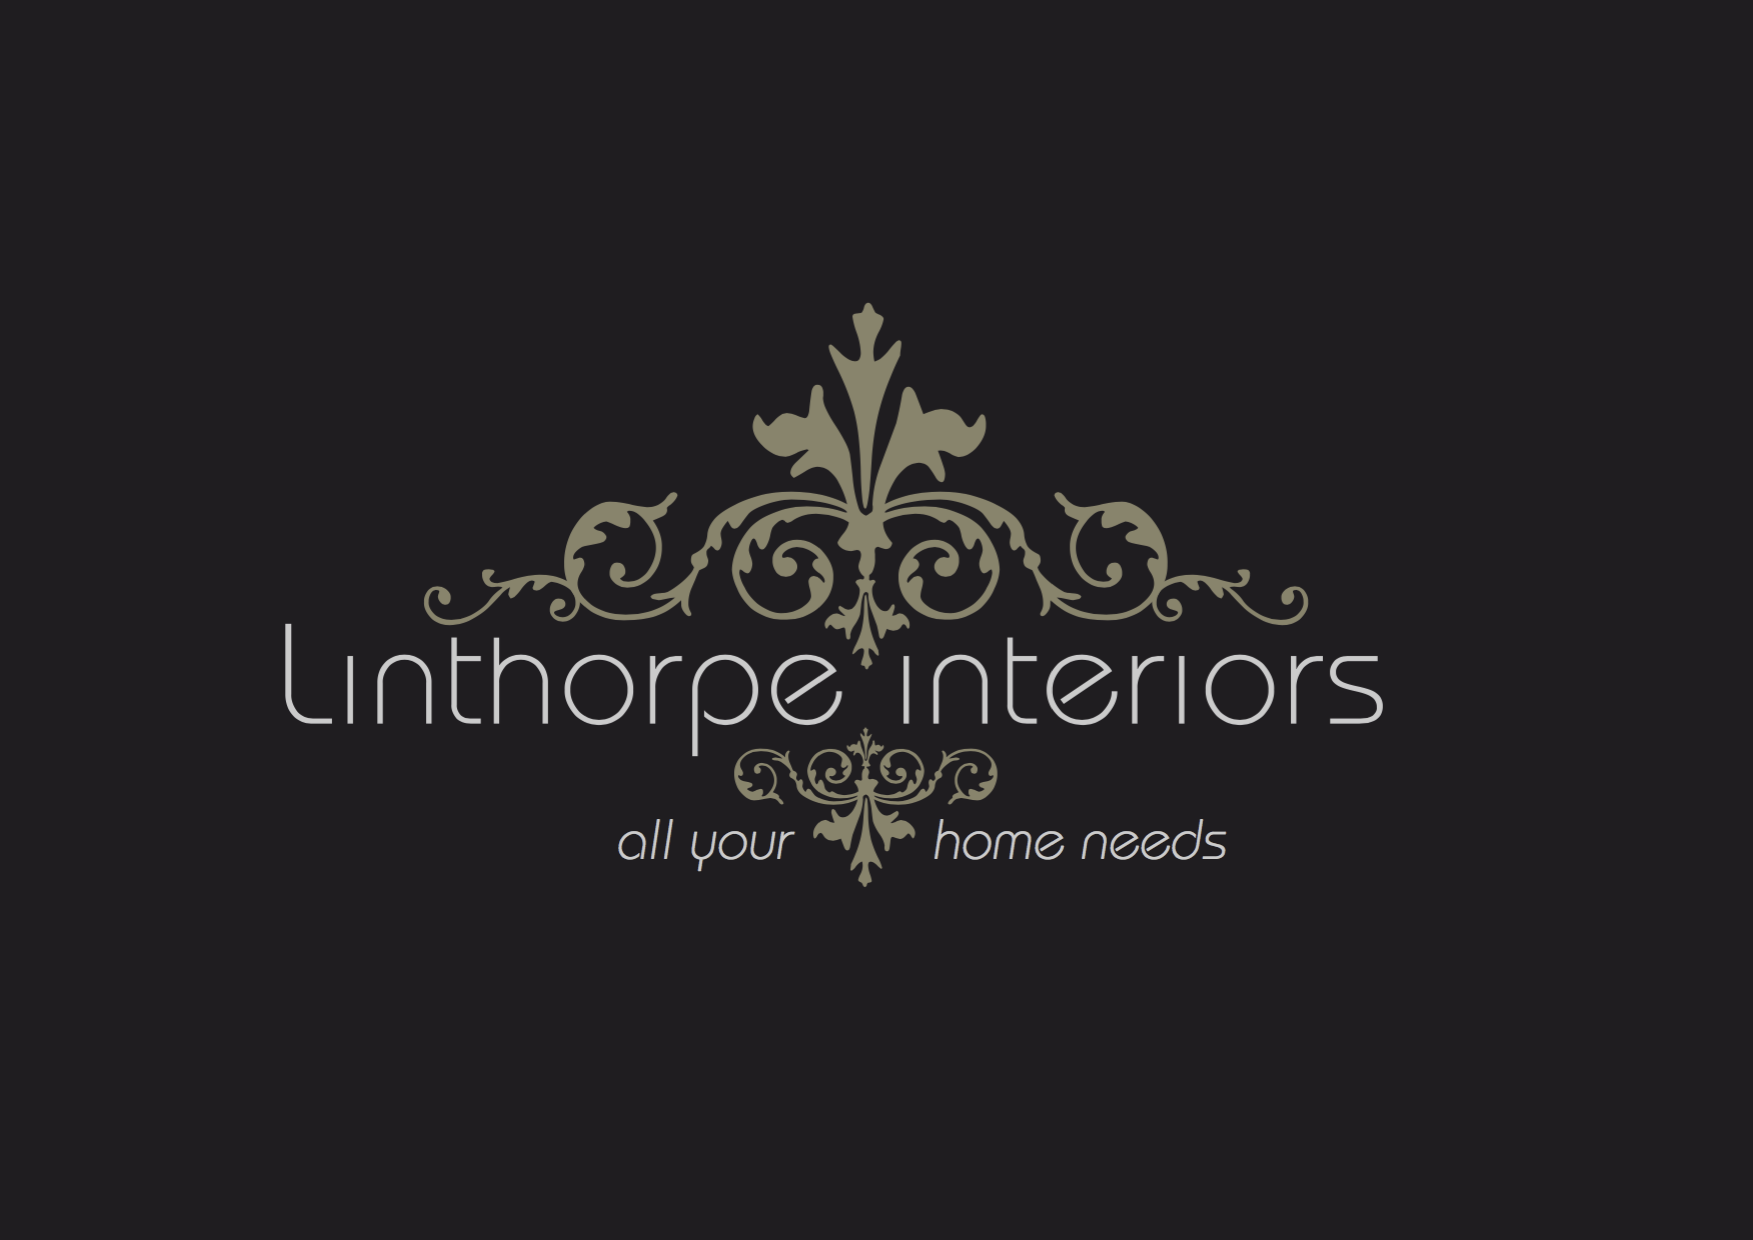 Logo of Linthorpe Interiors